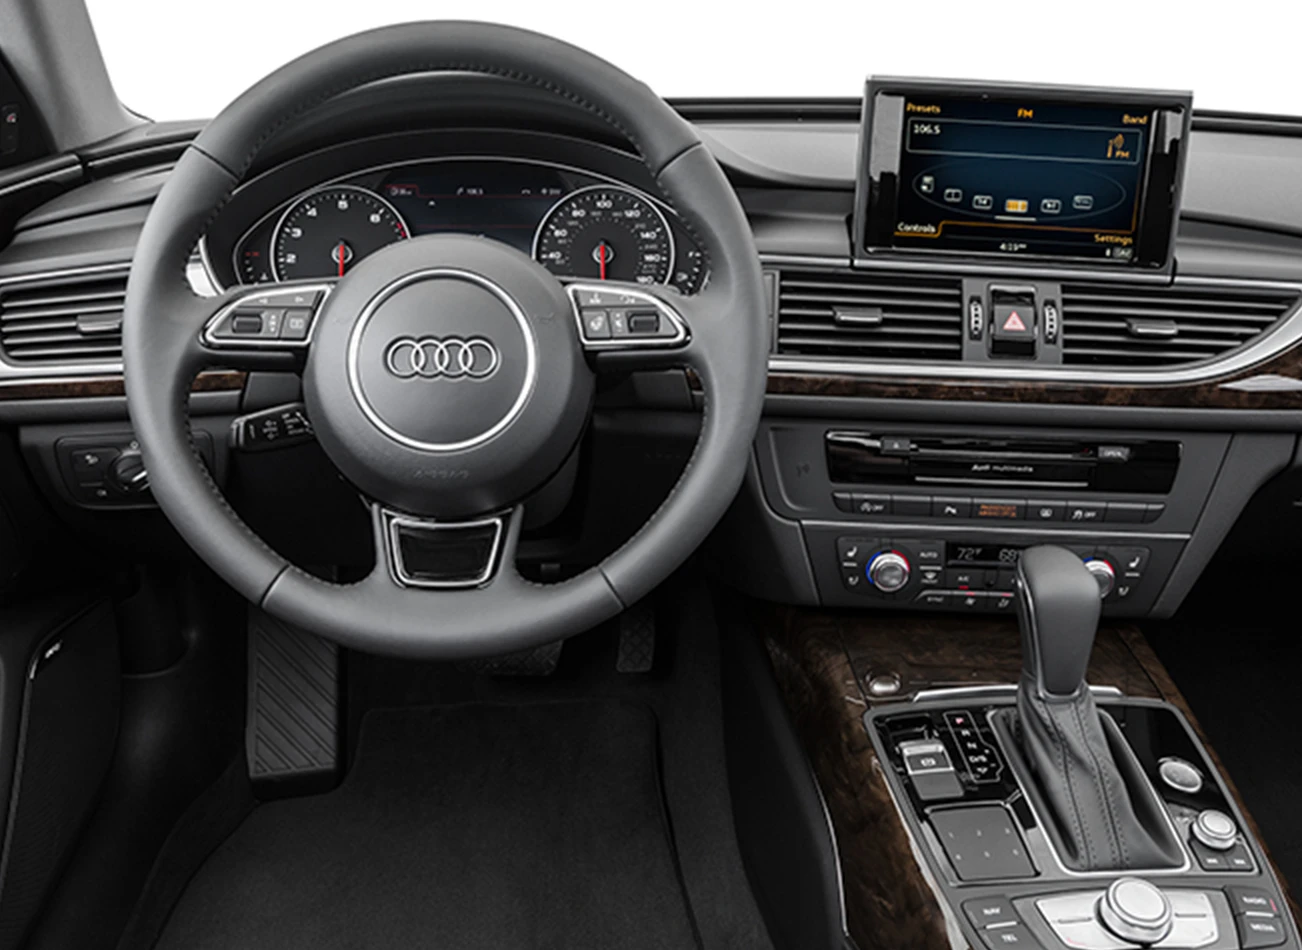 2016 Audi A6 Review: Dashboard | CarMax